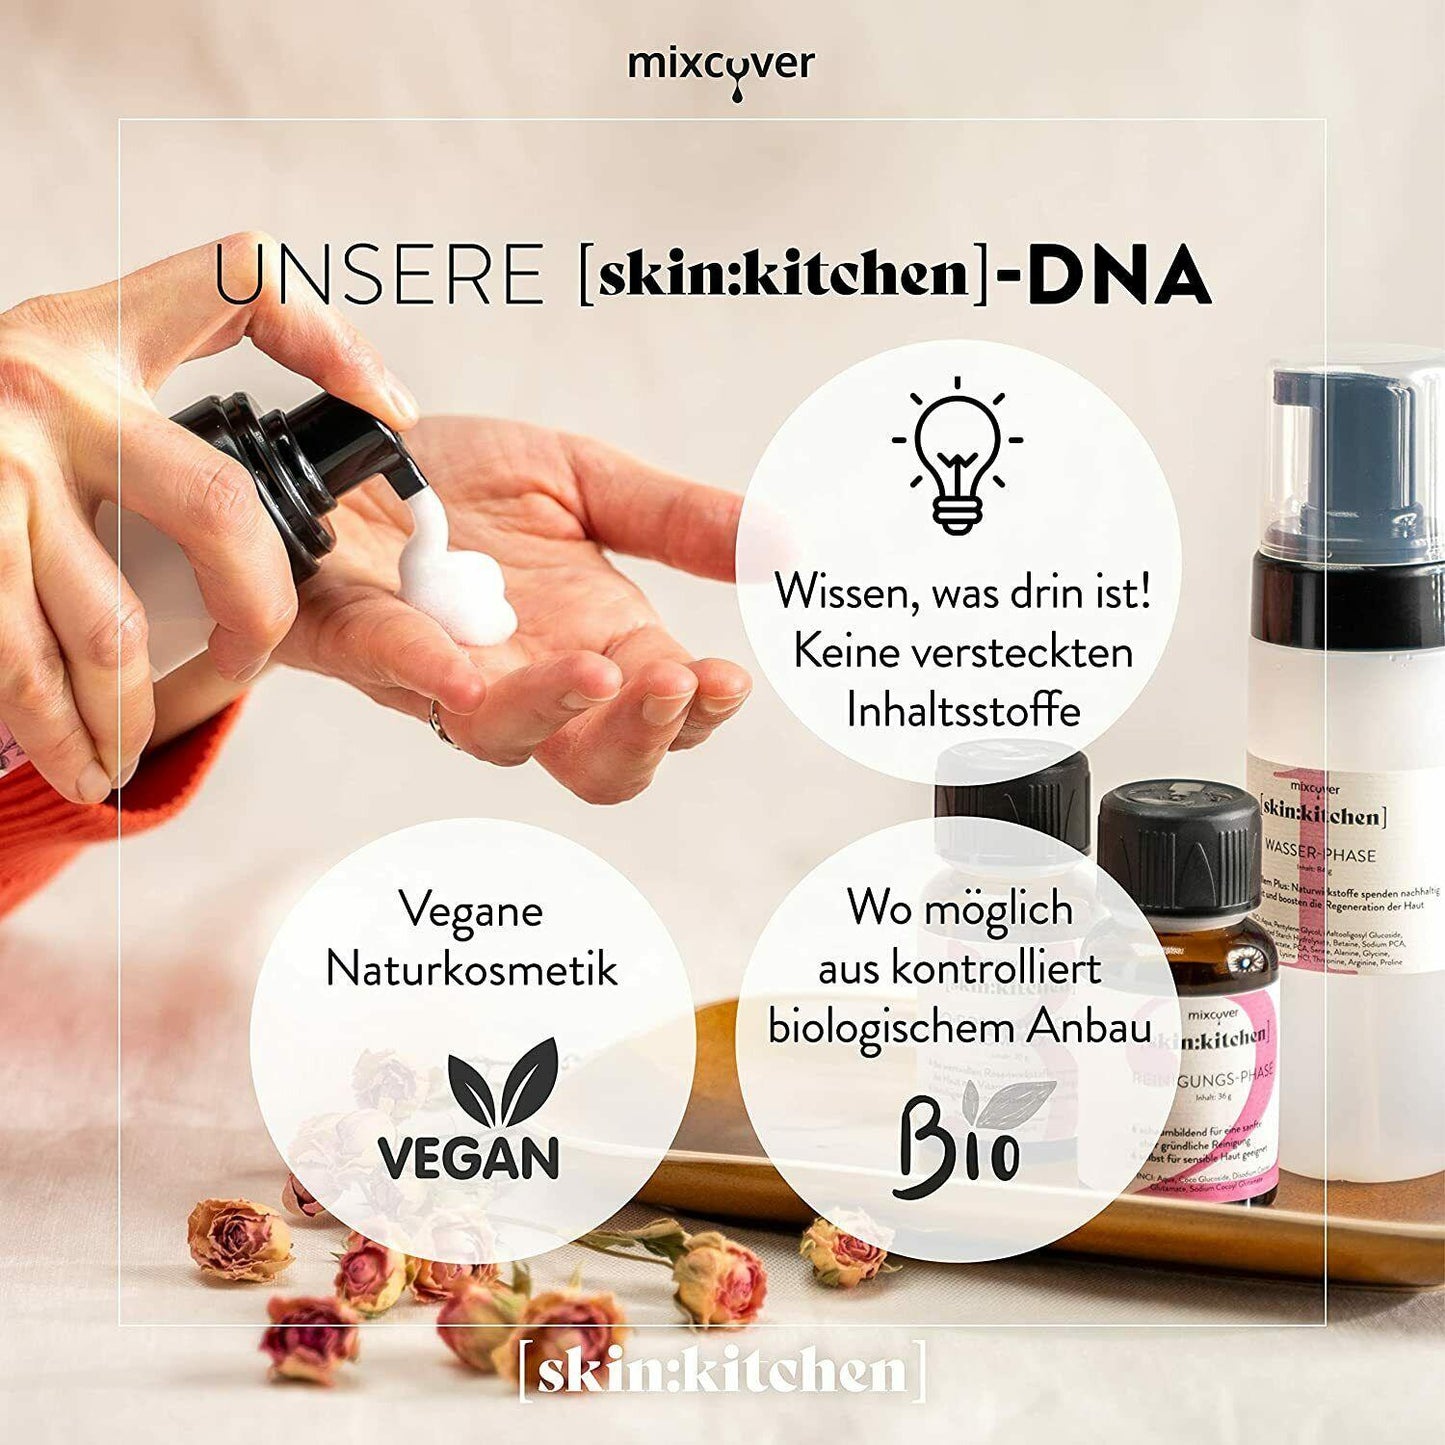 DIY Set Naturkosmetik Reinigungsmousse Rosenhydrolat Tonic für Küchenmaschinen - Mixcover - Mixcover